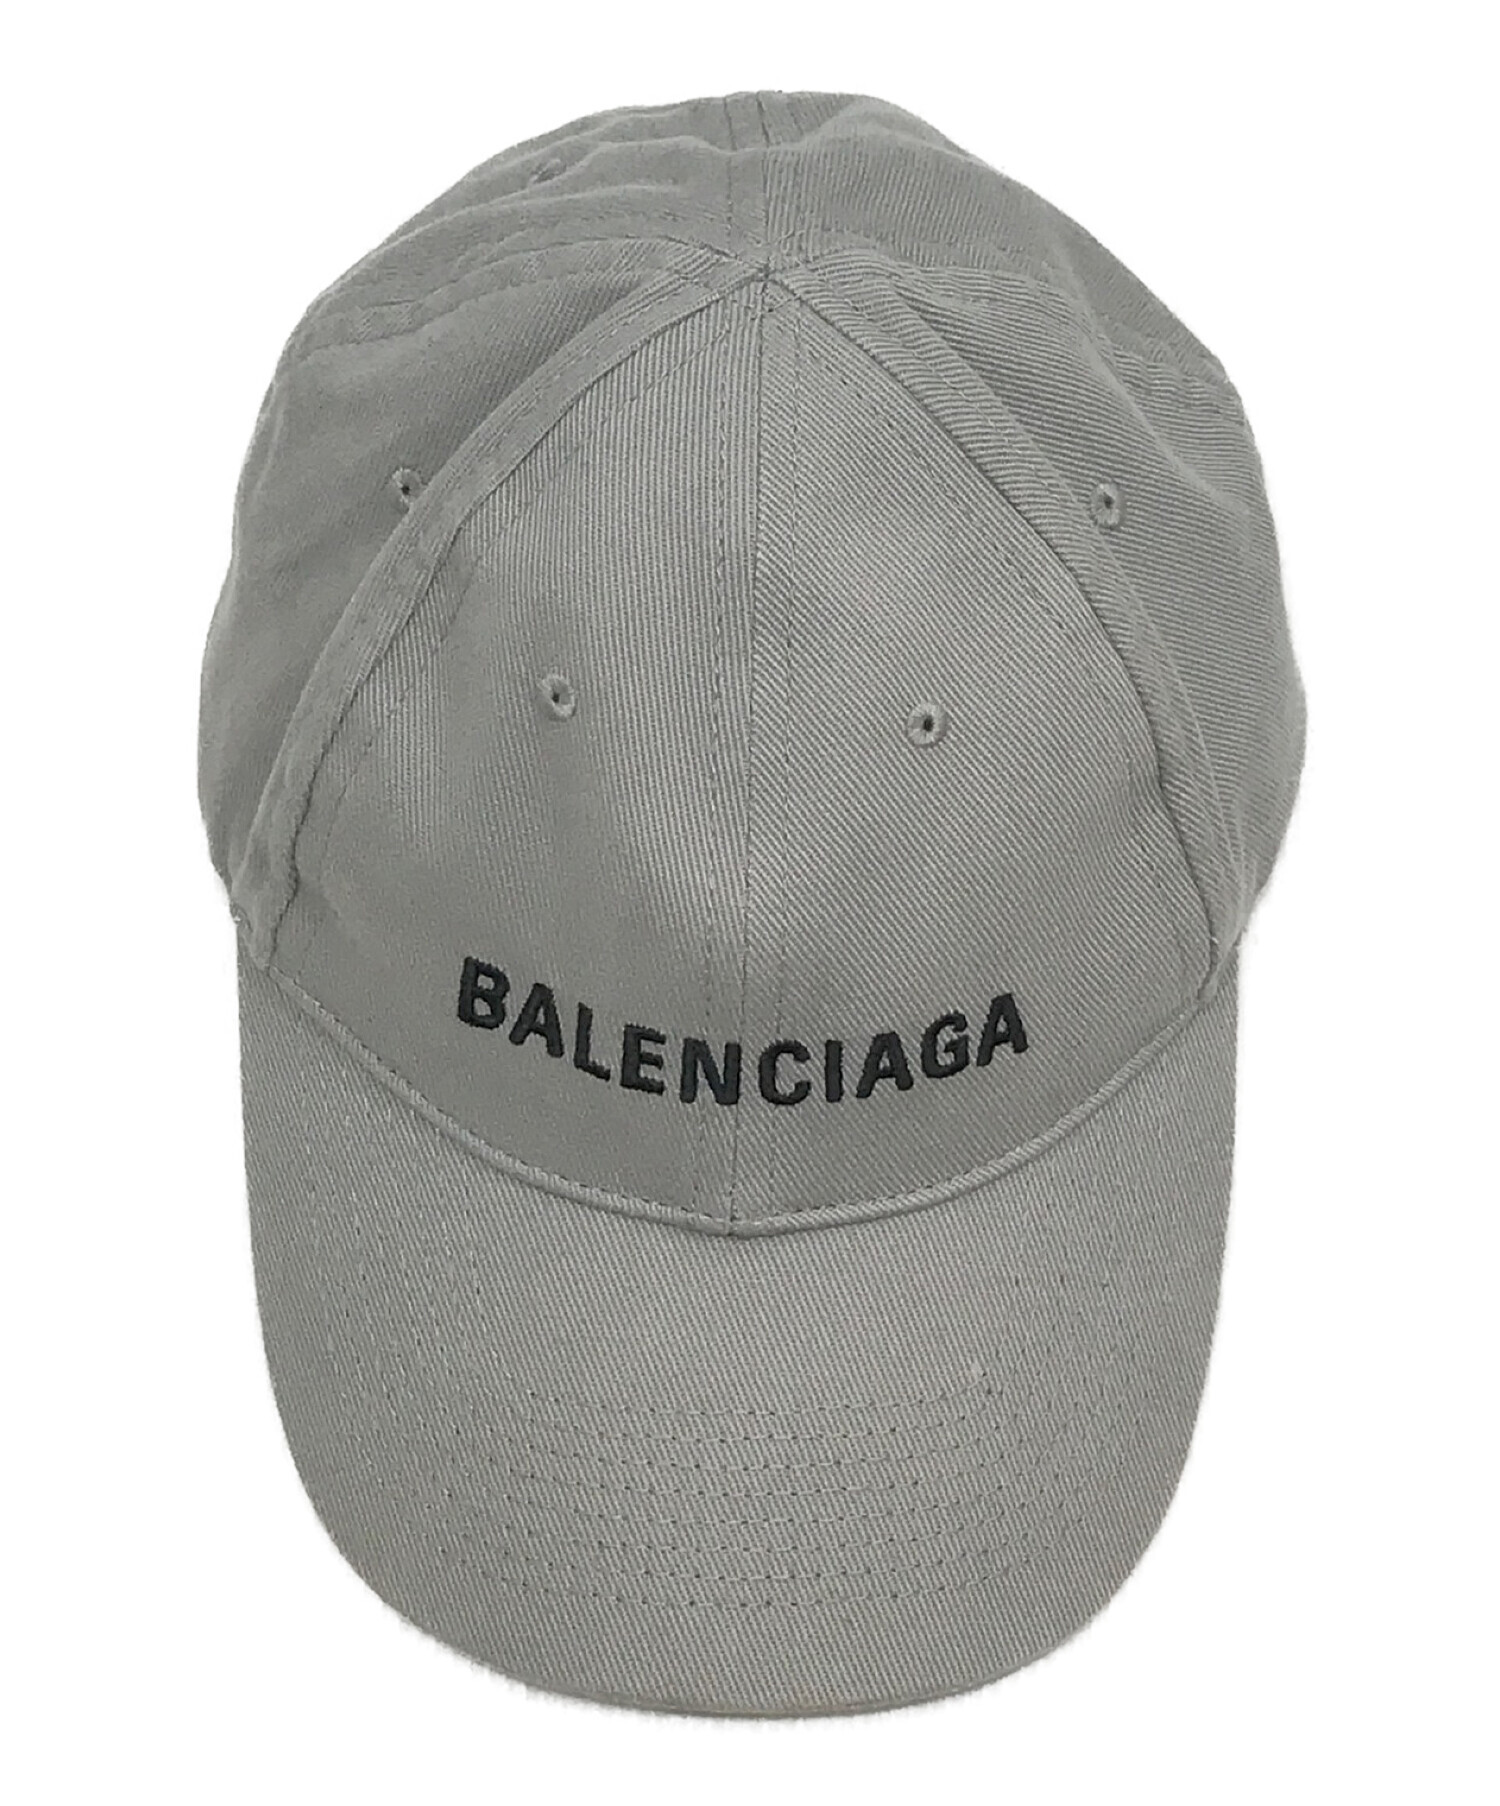 BALENCIAGA (バレンシアガ) キャップ グレー サイズ:L (59cm)